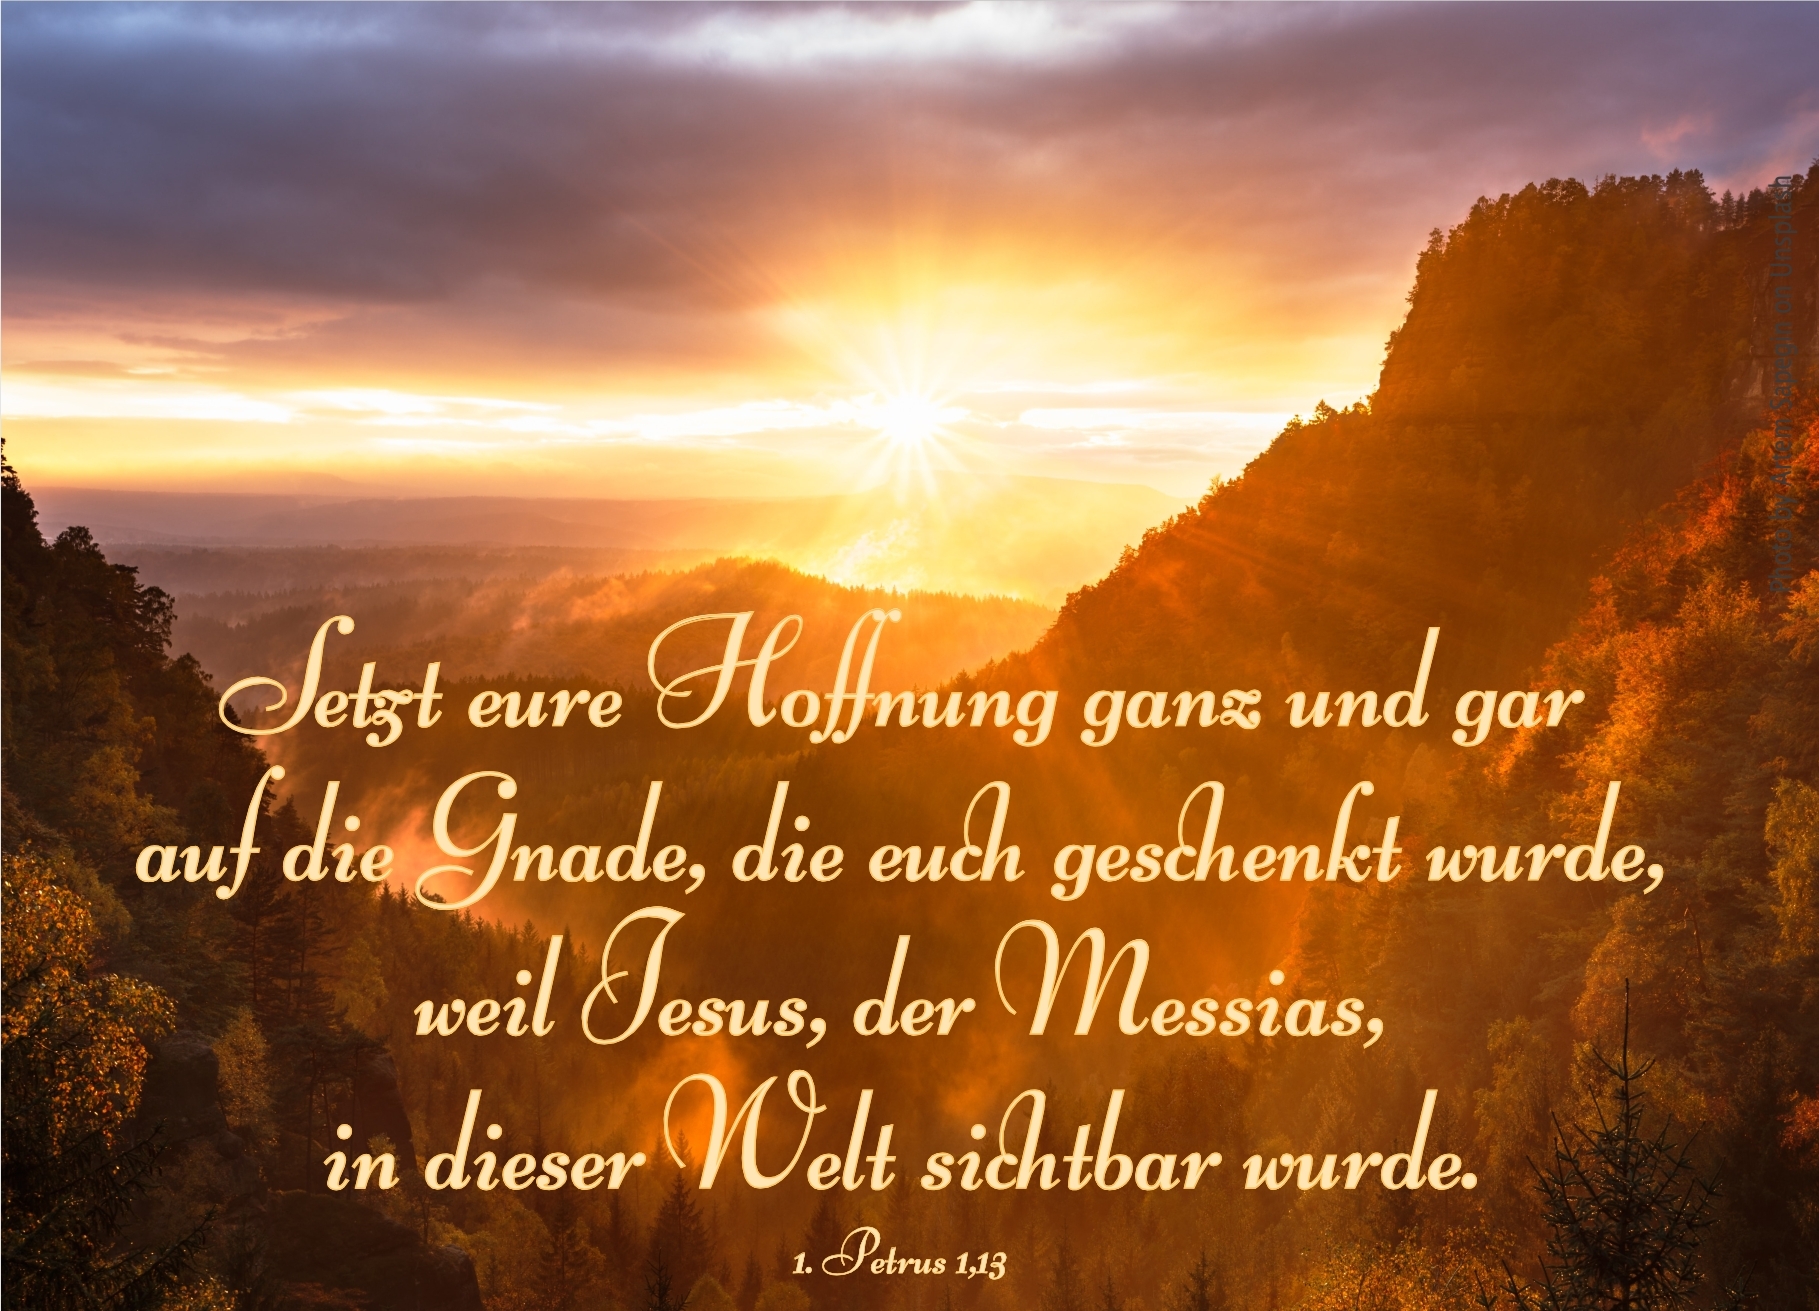 alt="Sonnenuntergang_ueber_bewaldetem_Tal_erwartet_bibelhoerbuch_Hoffnung_die_Leben_ermoeglicht"